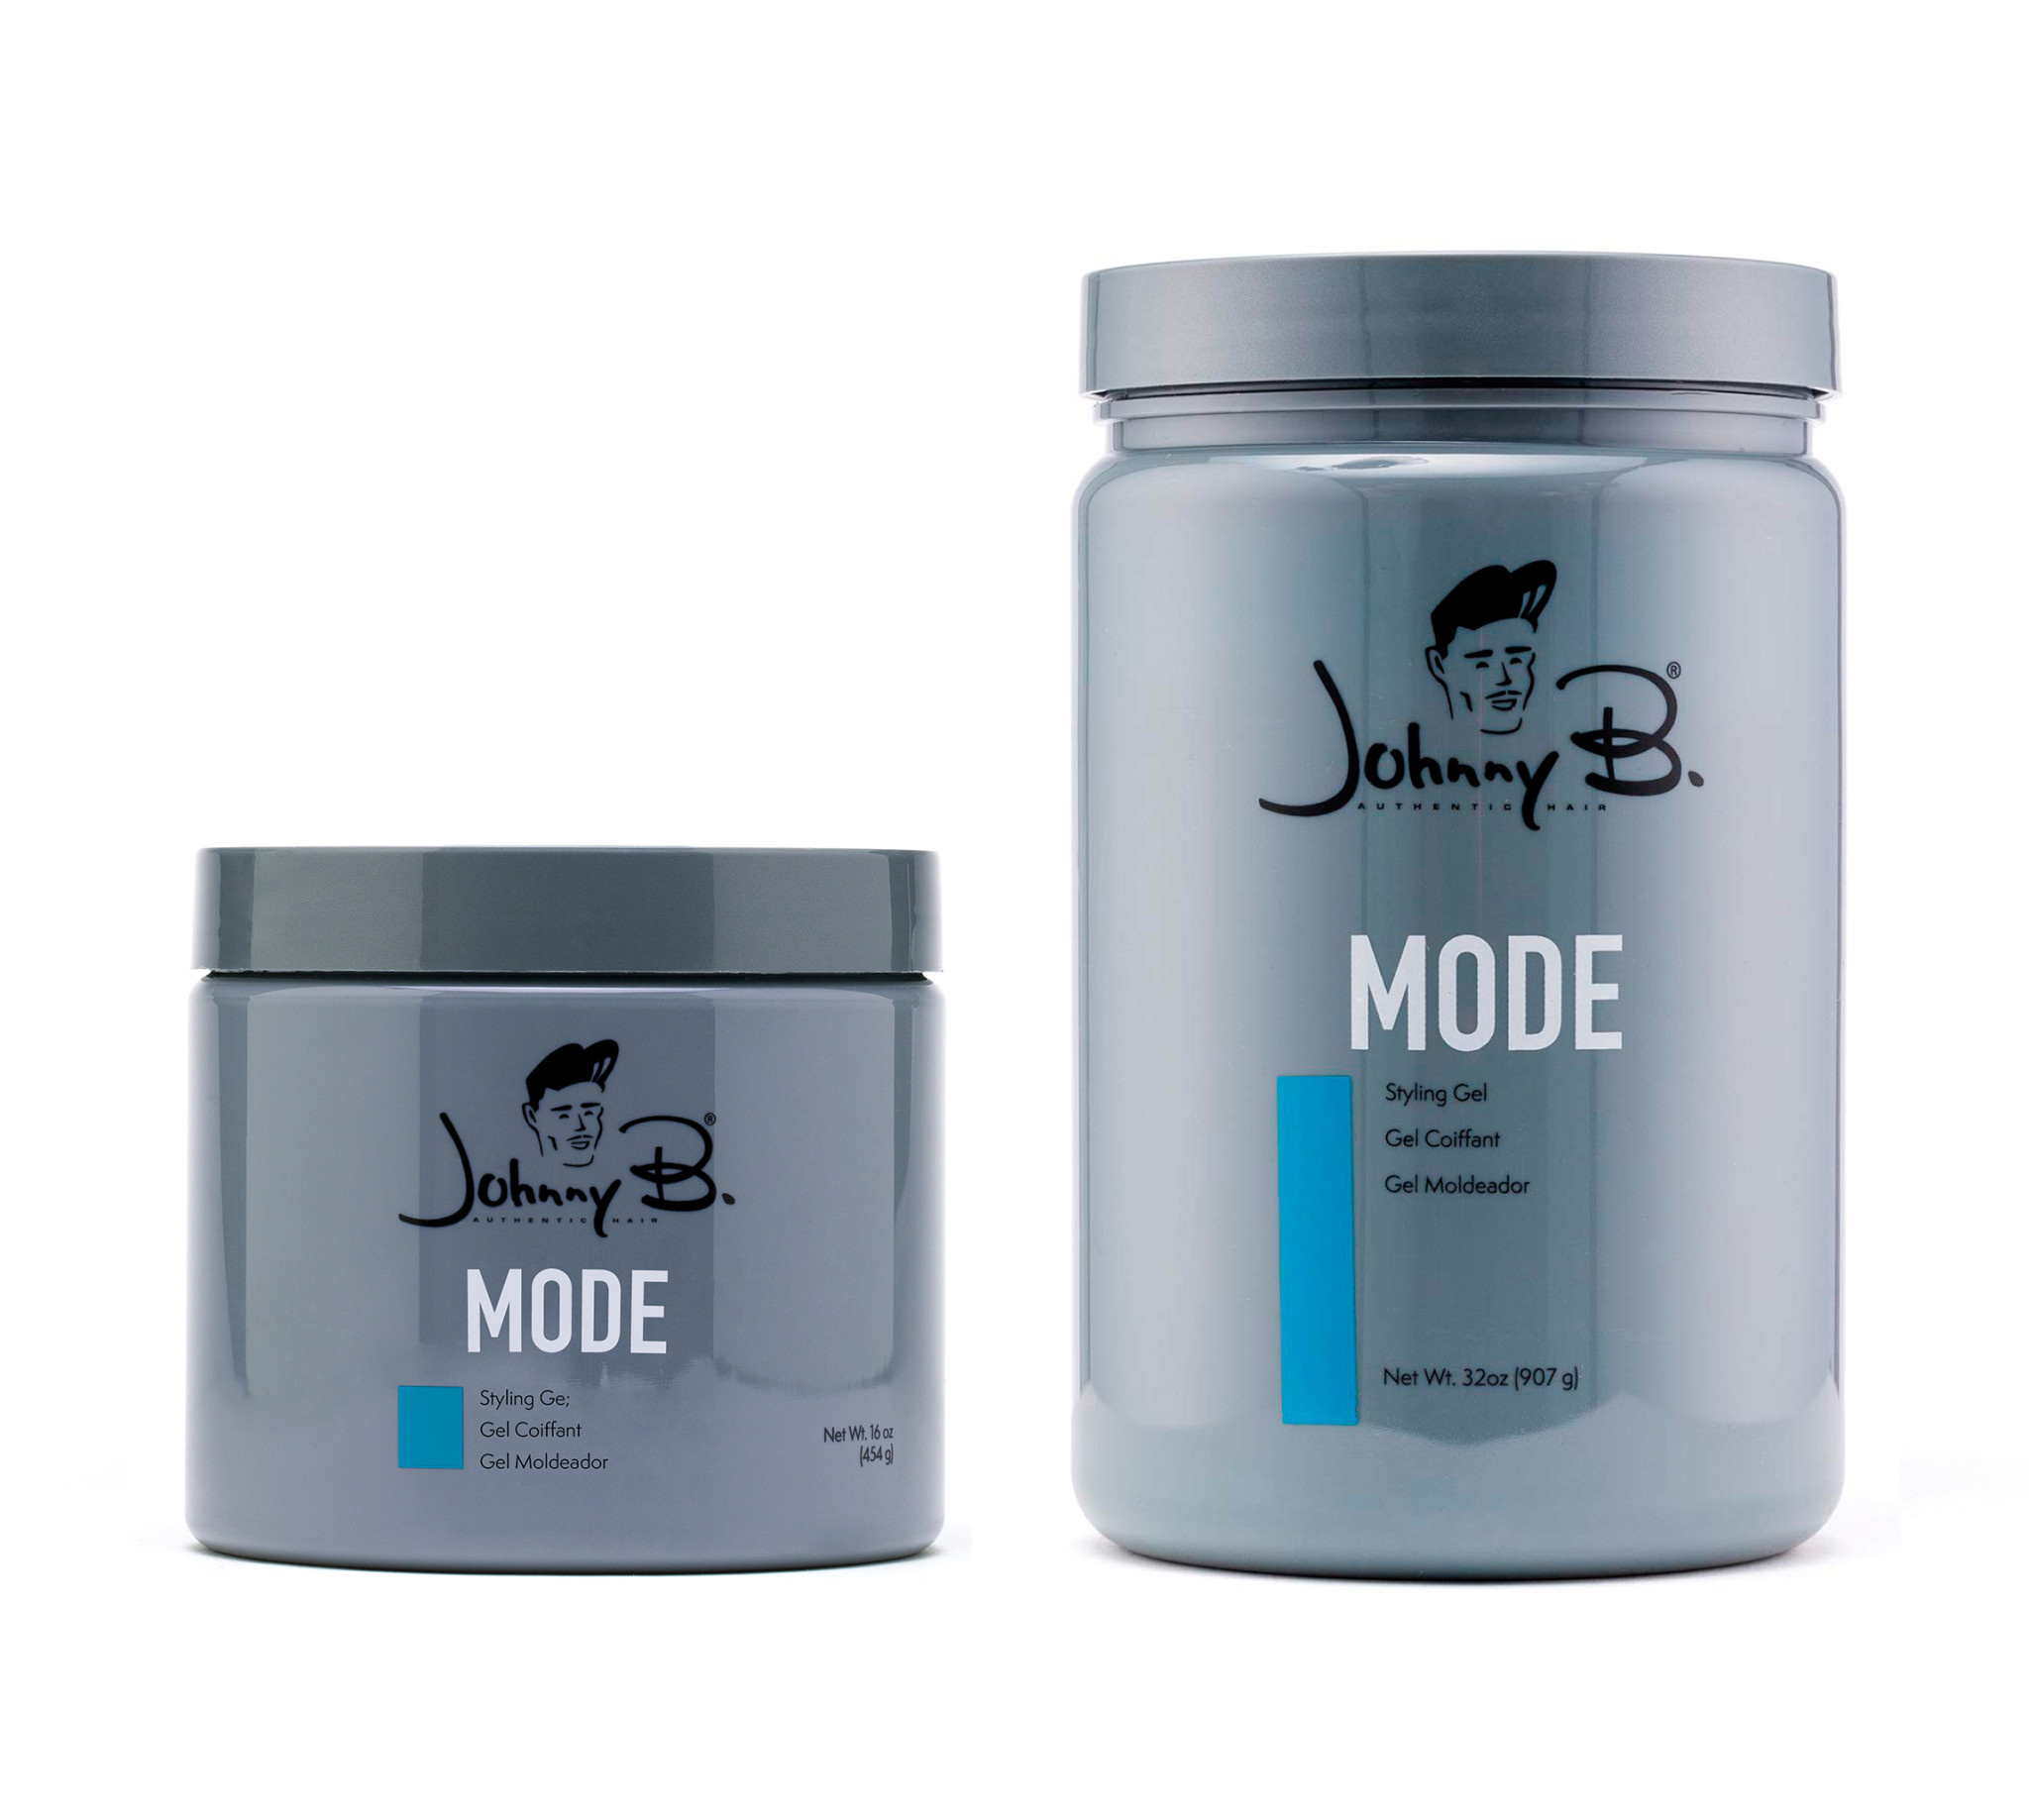 Johnny B Mode Styling Gel - Beauty Kit Solutions